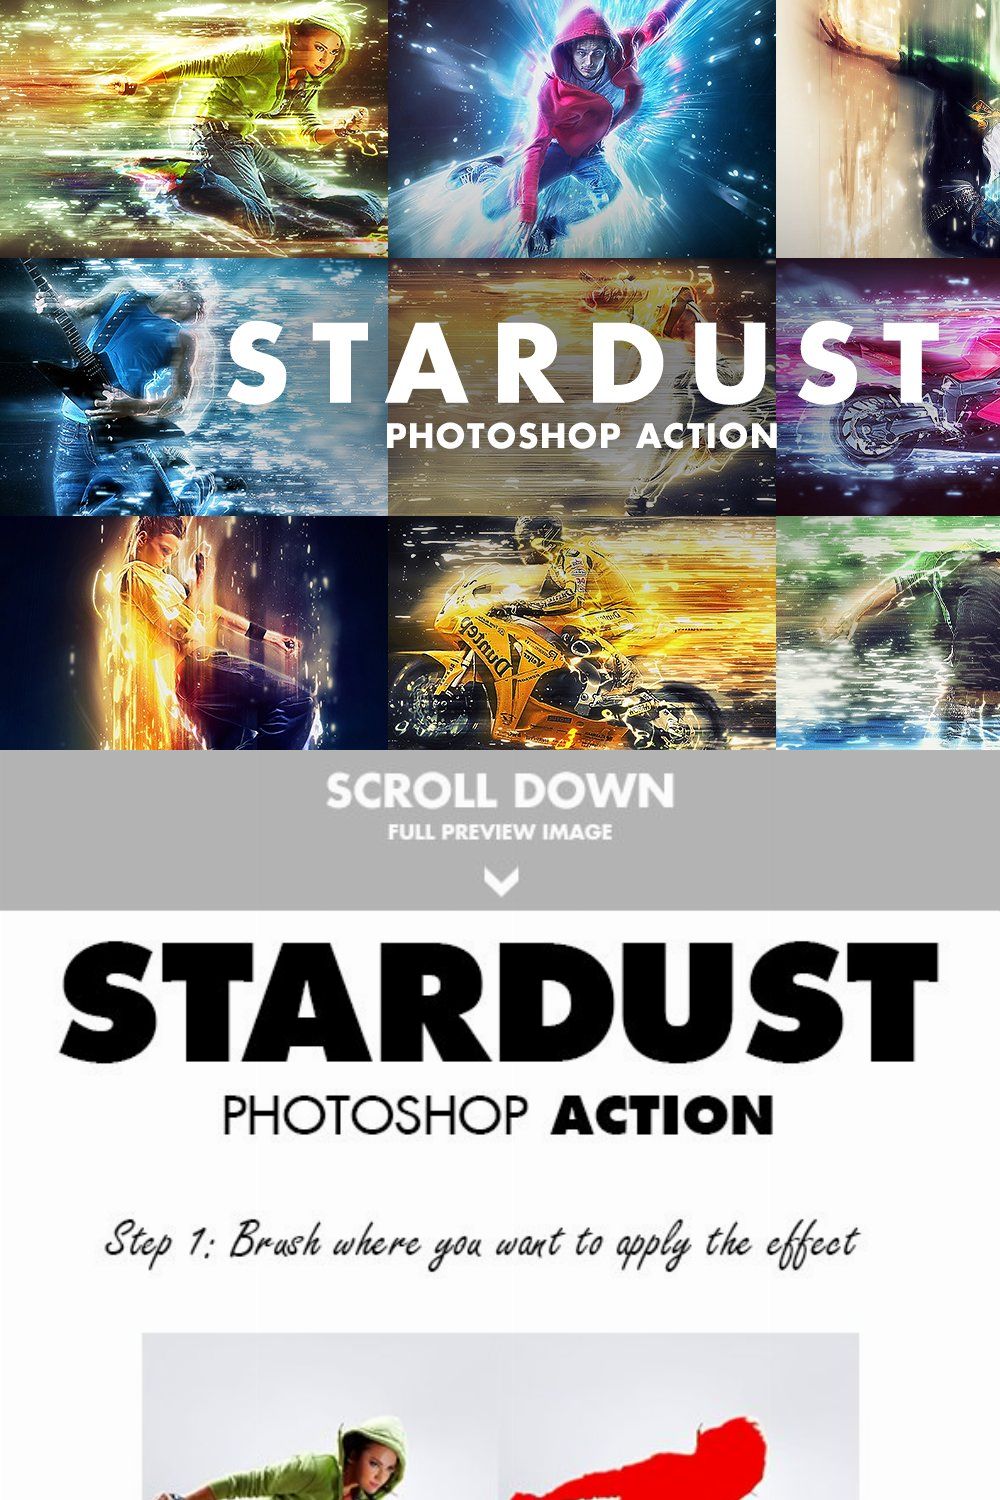 Stardust Photoshop Action pinterest preview image.